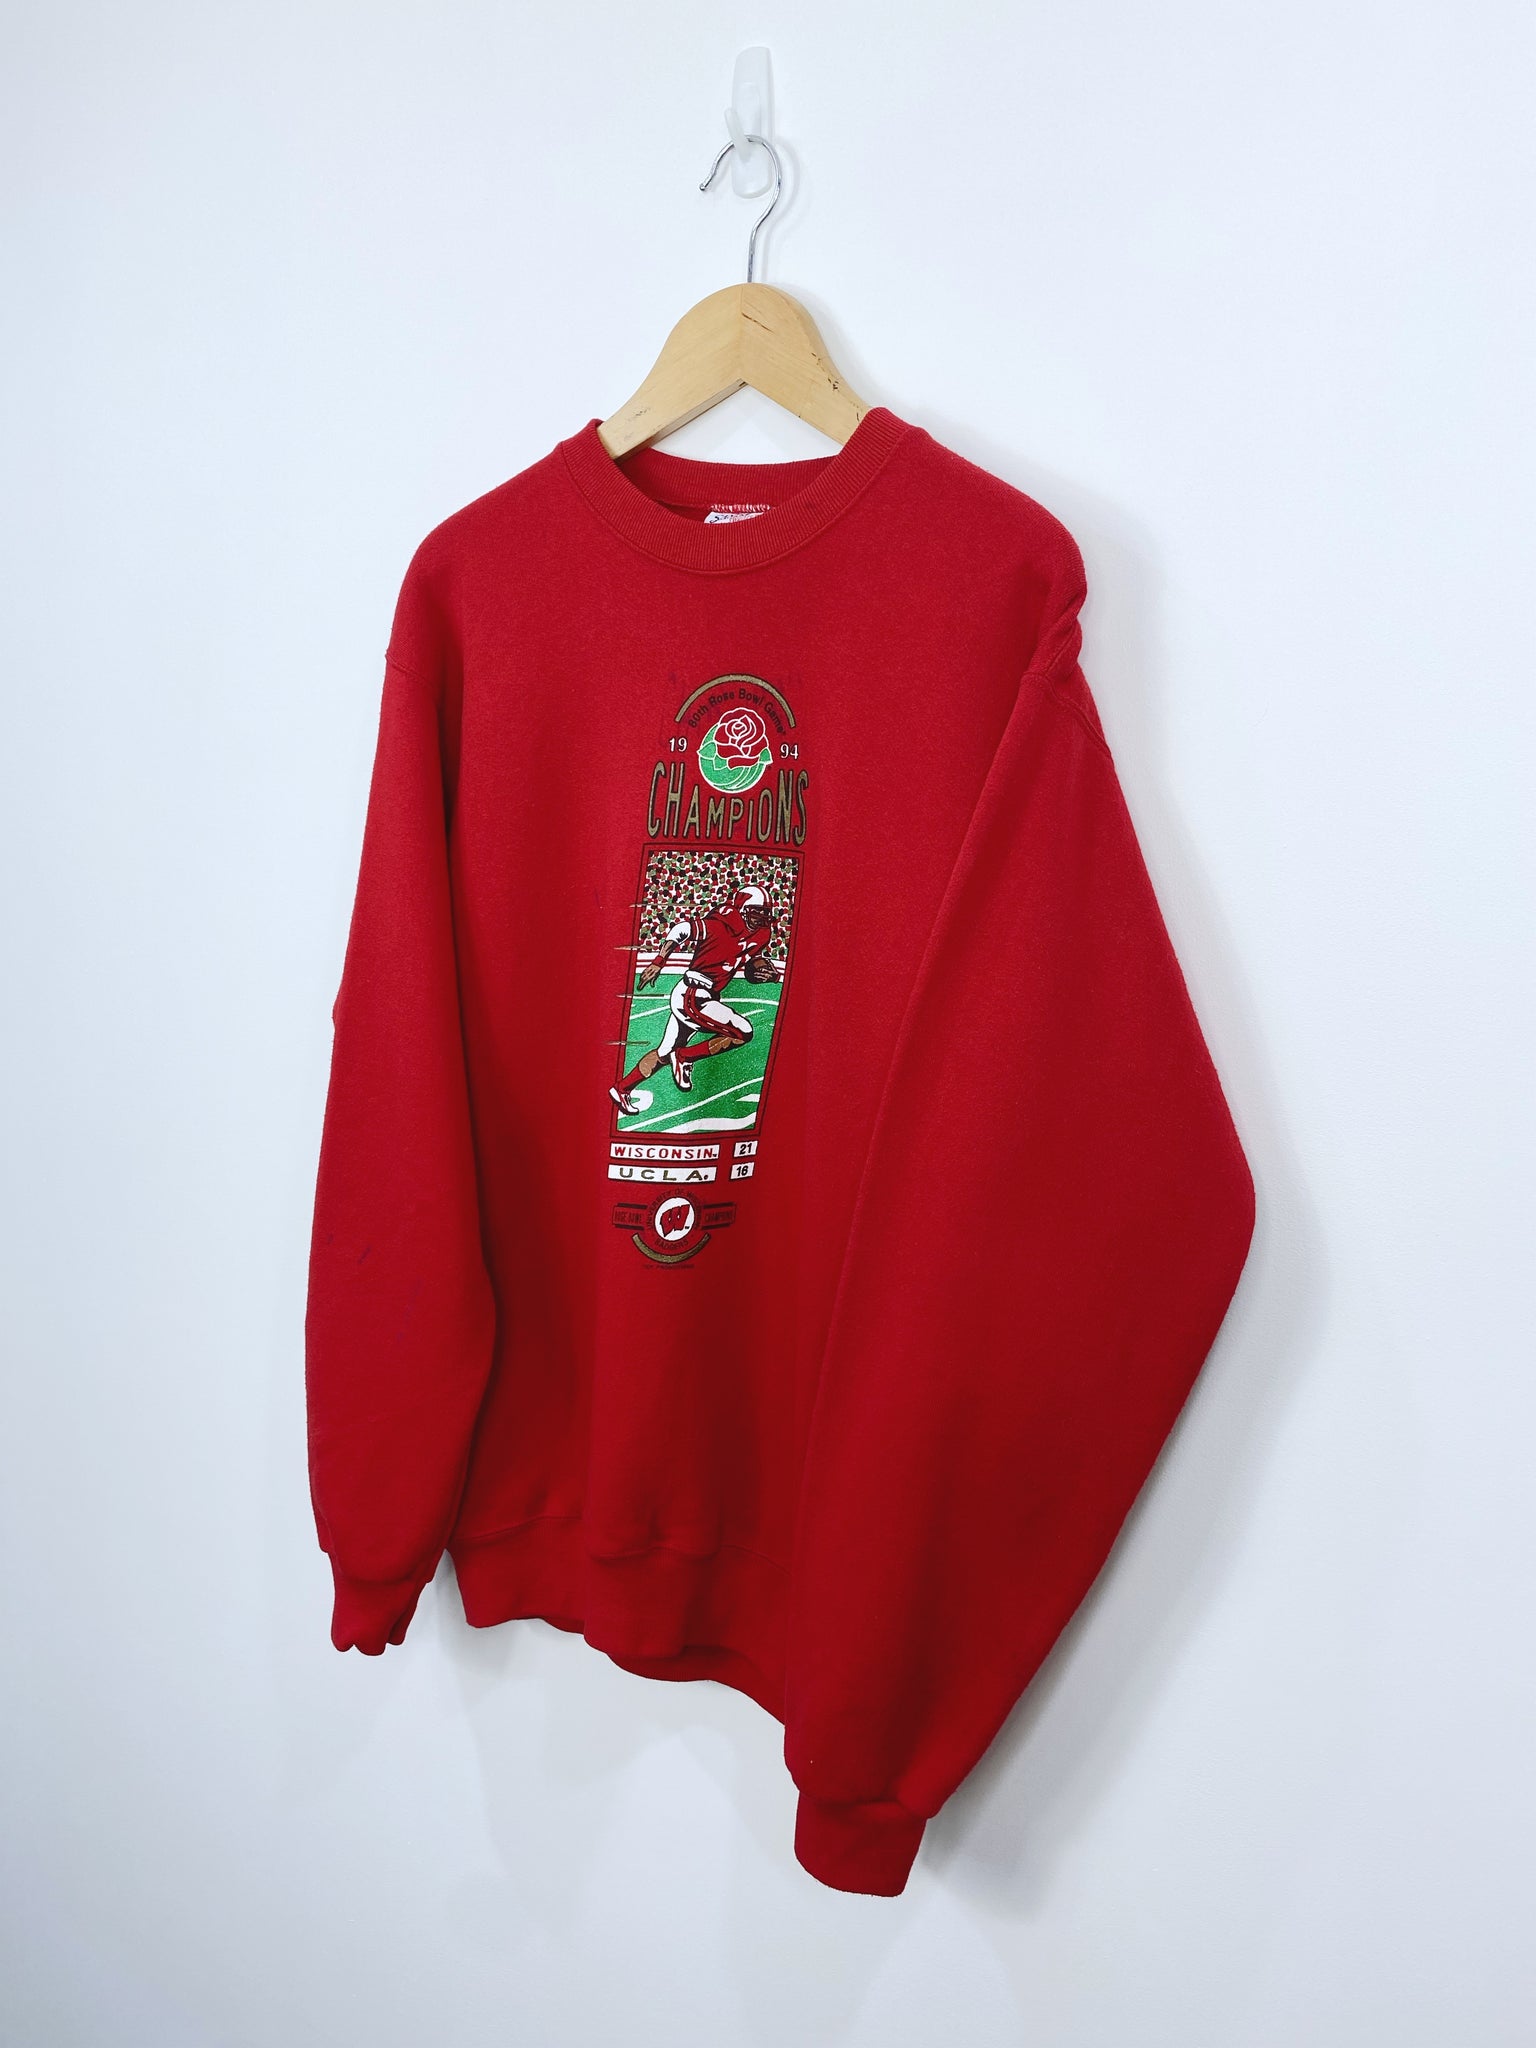 Vintage 1994 Wisconsin Championship Sweatshirt L